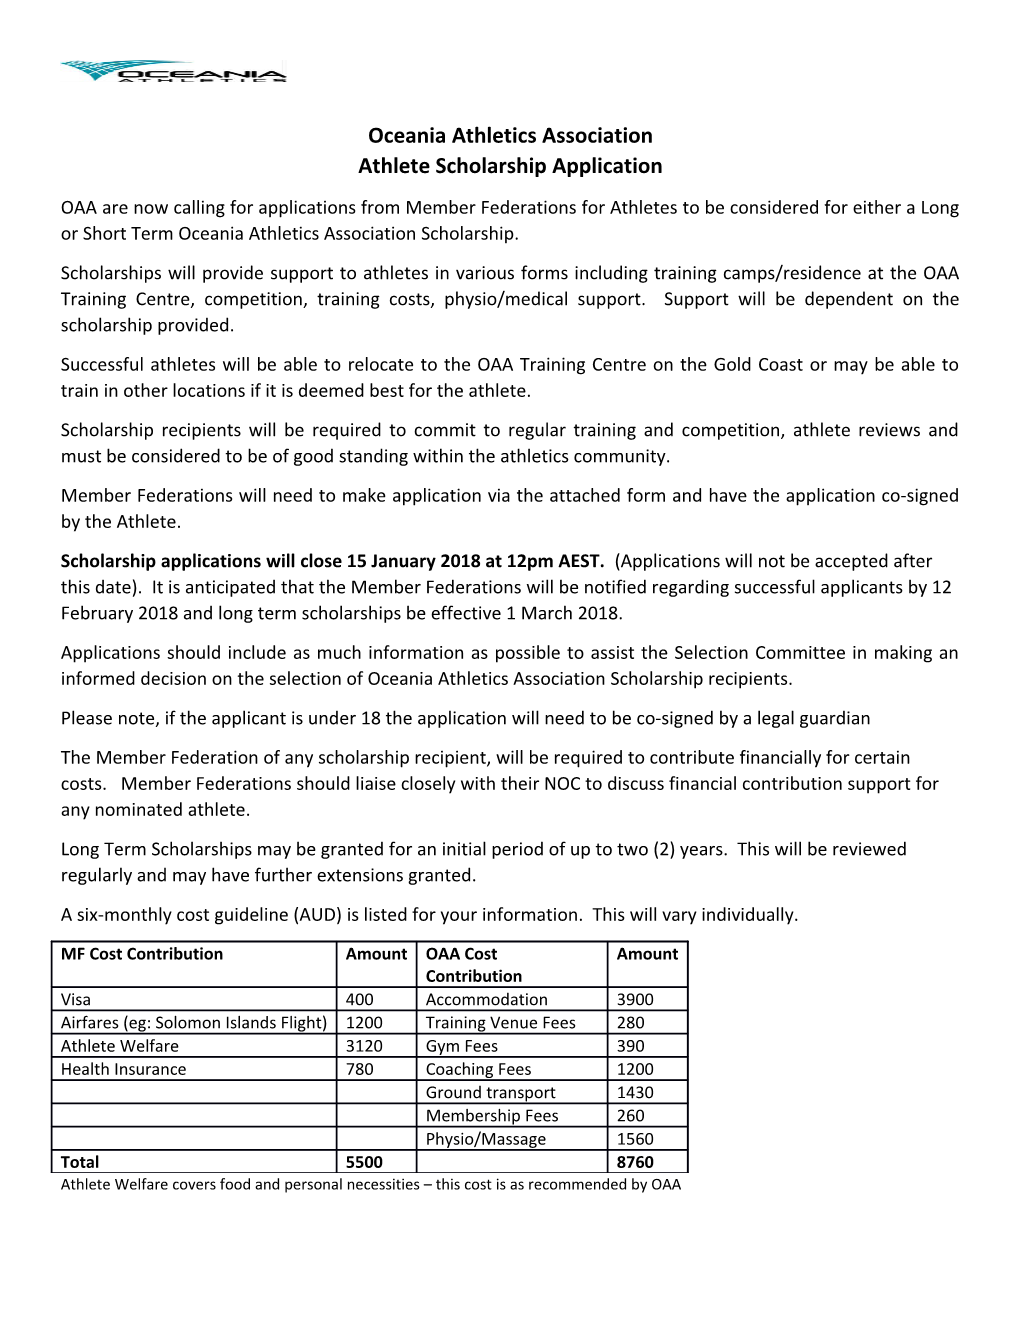 Oceania Athletics Association Athlete Scholarship Application